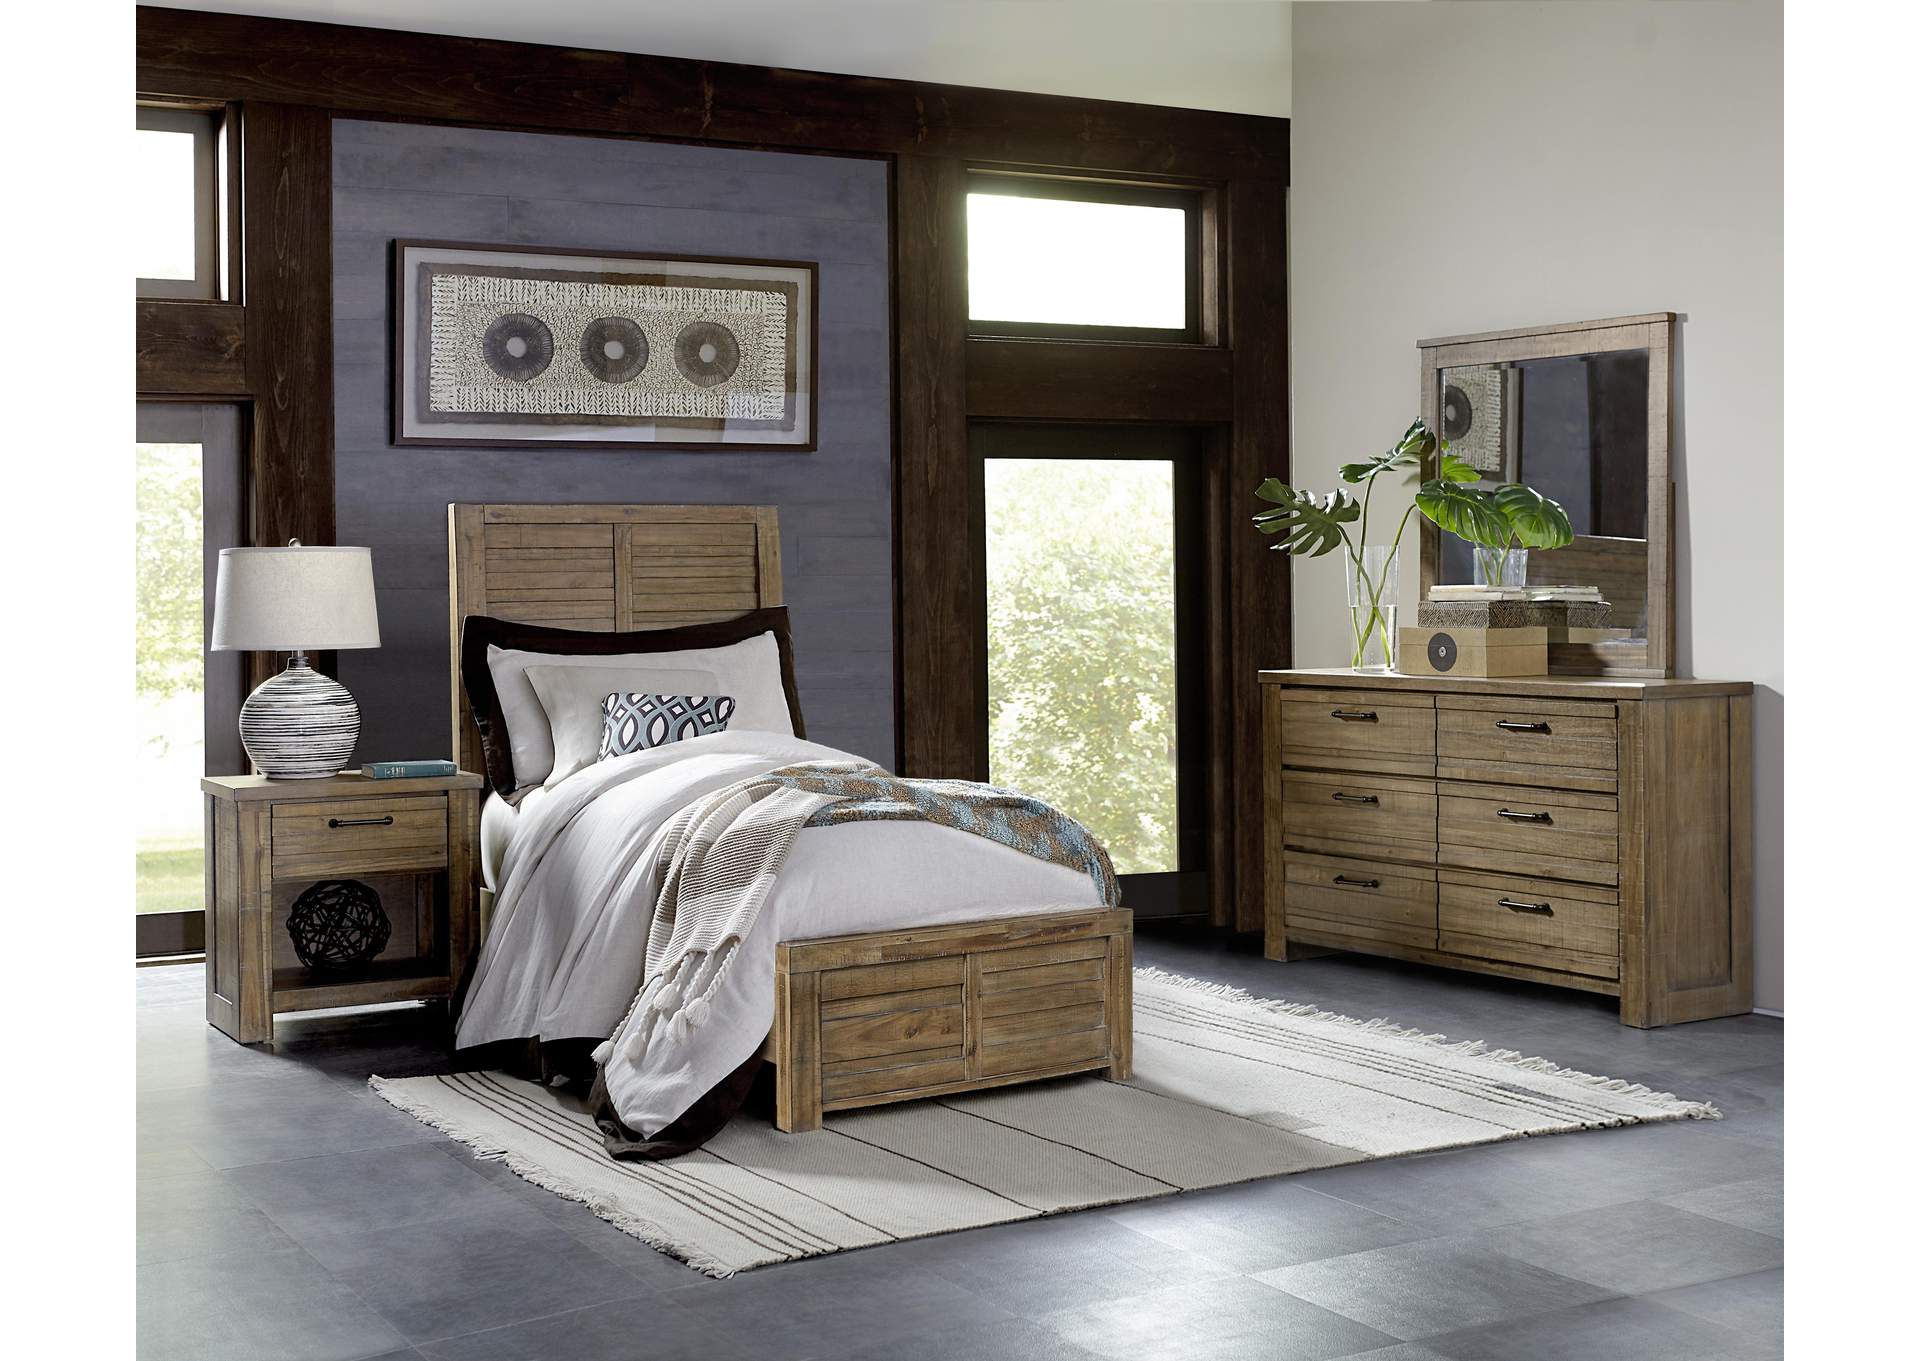 SoHo Twin Bed,Pulaski Furniture